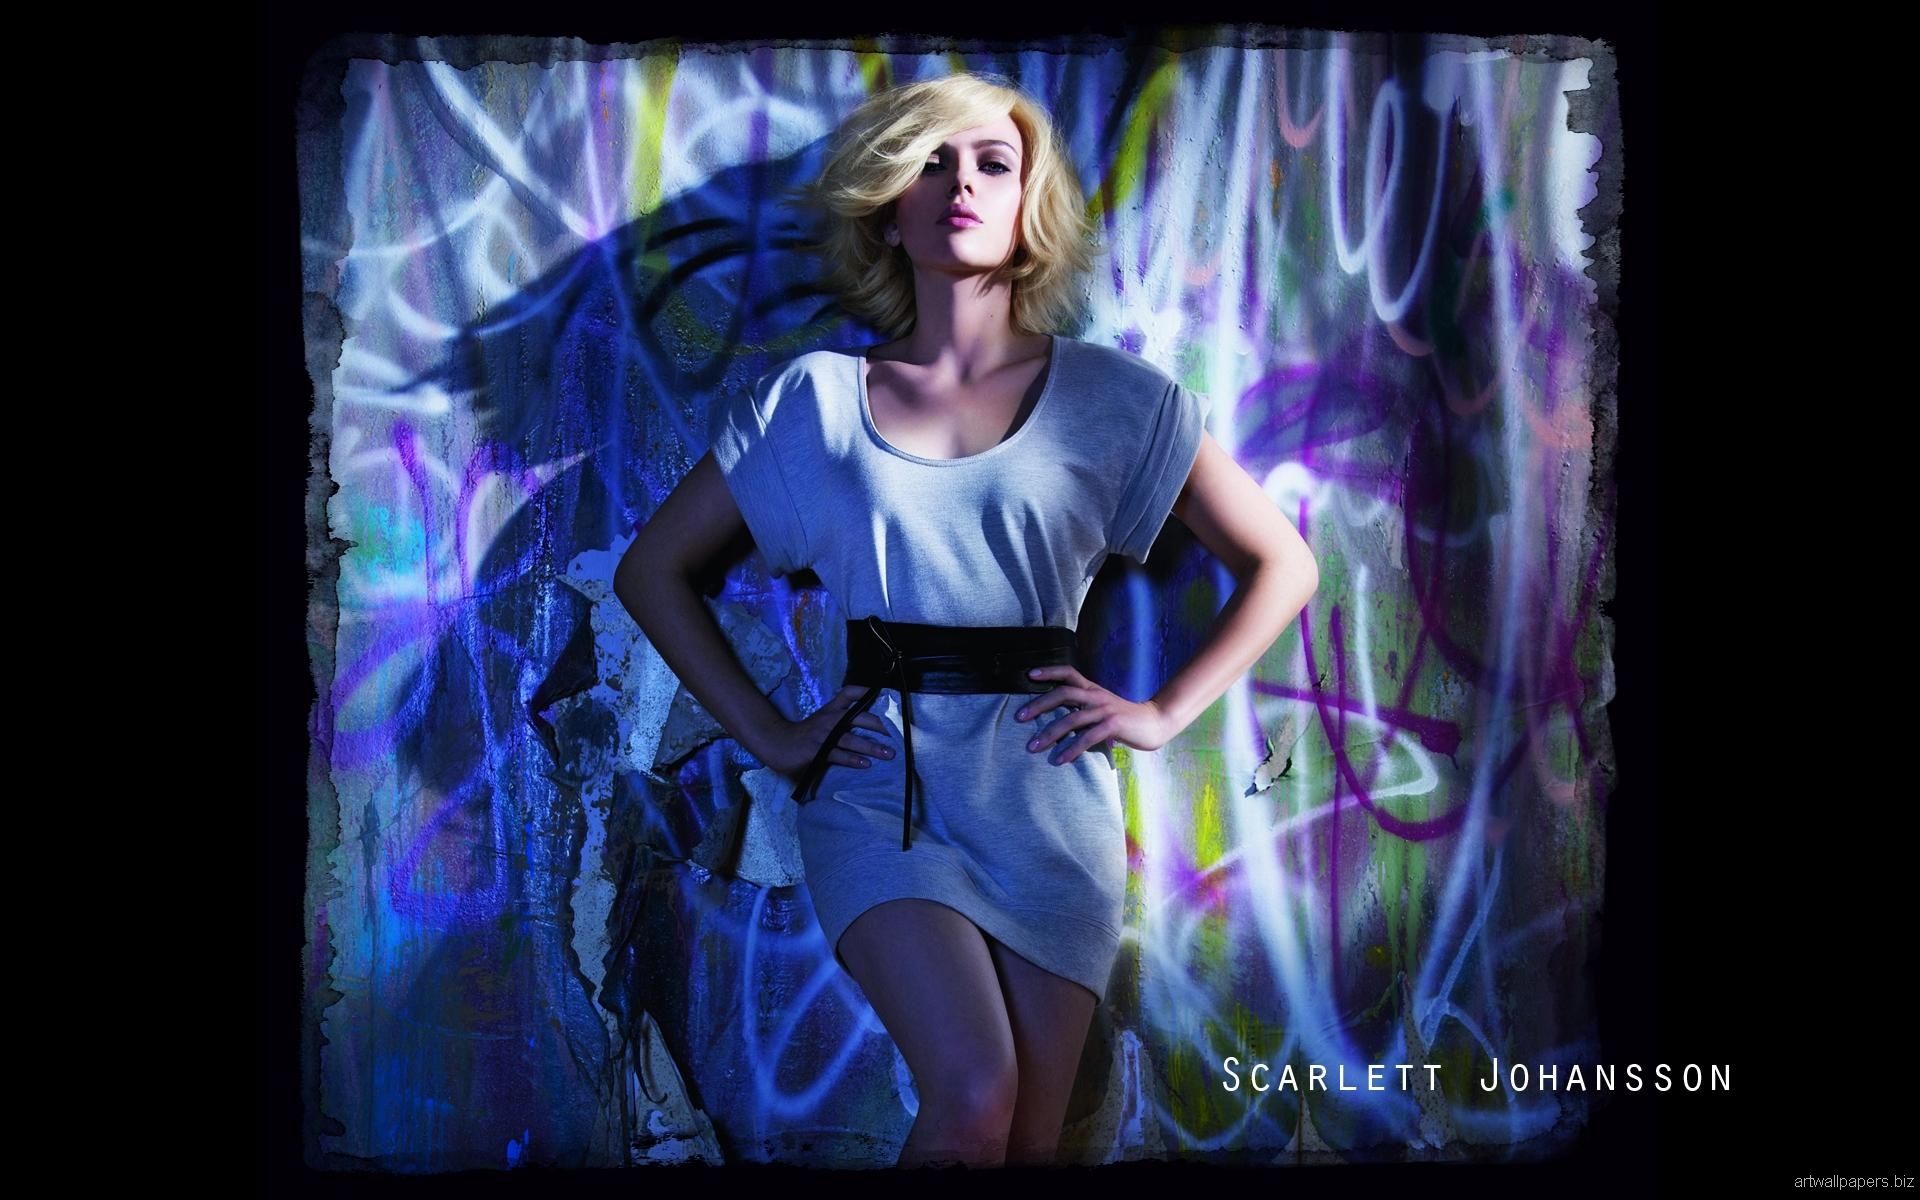 Scarlett Johansson in high definition desktop wallpaper.